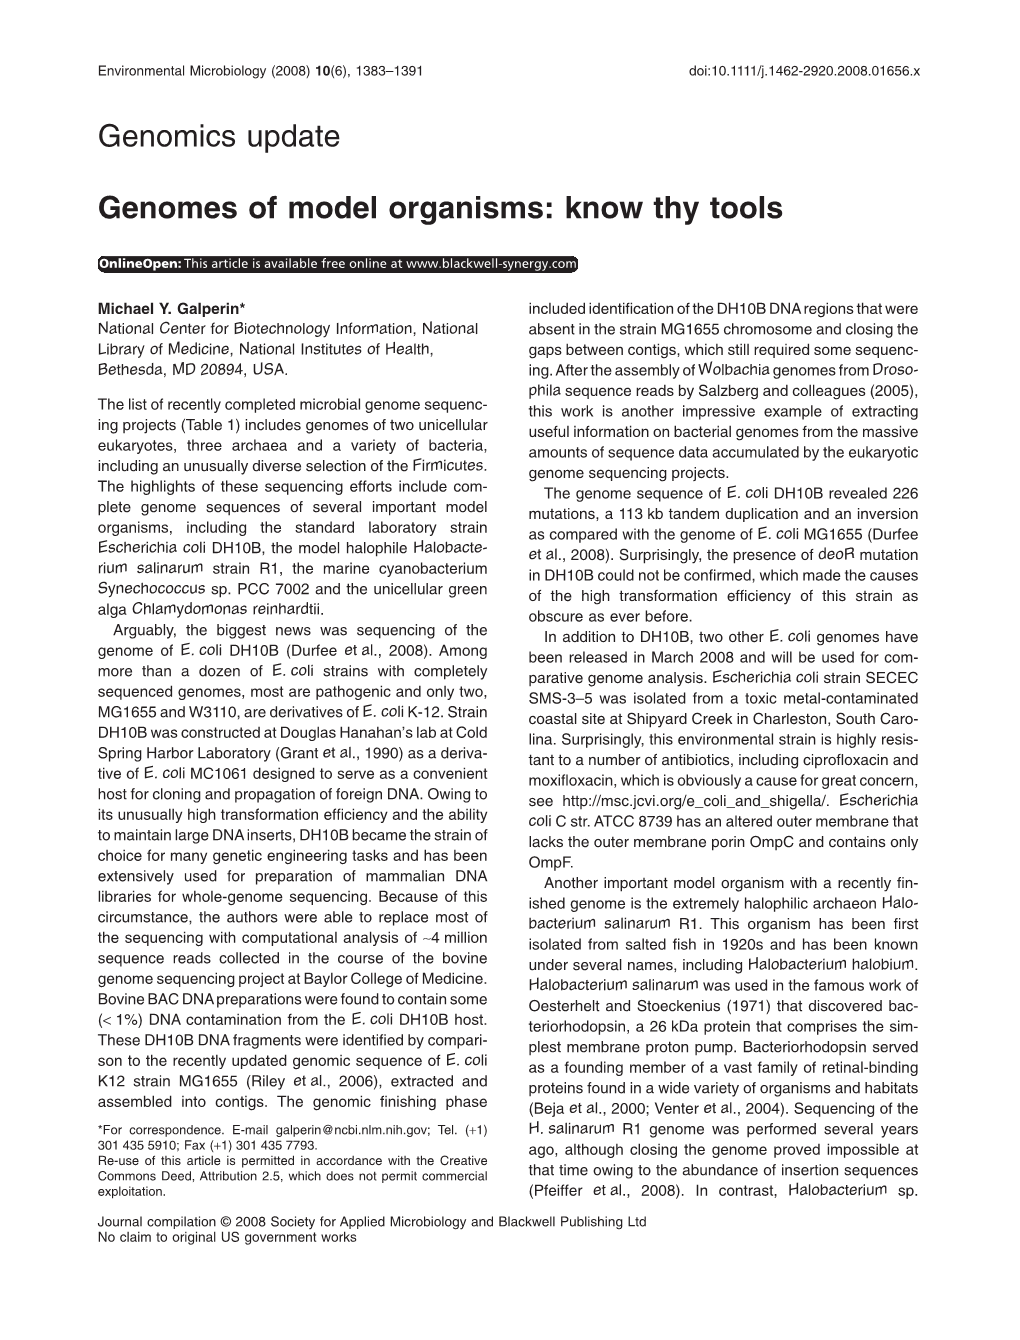 Genomics Update Genomes of Model Organisms